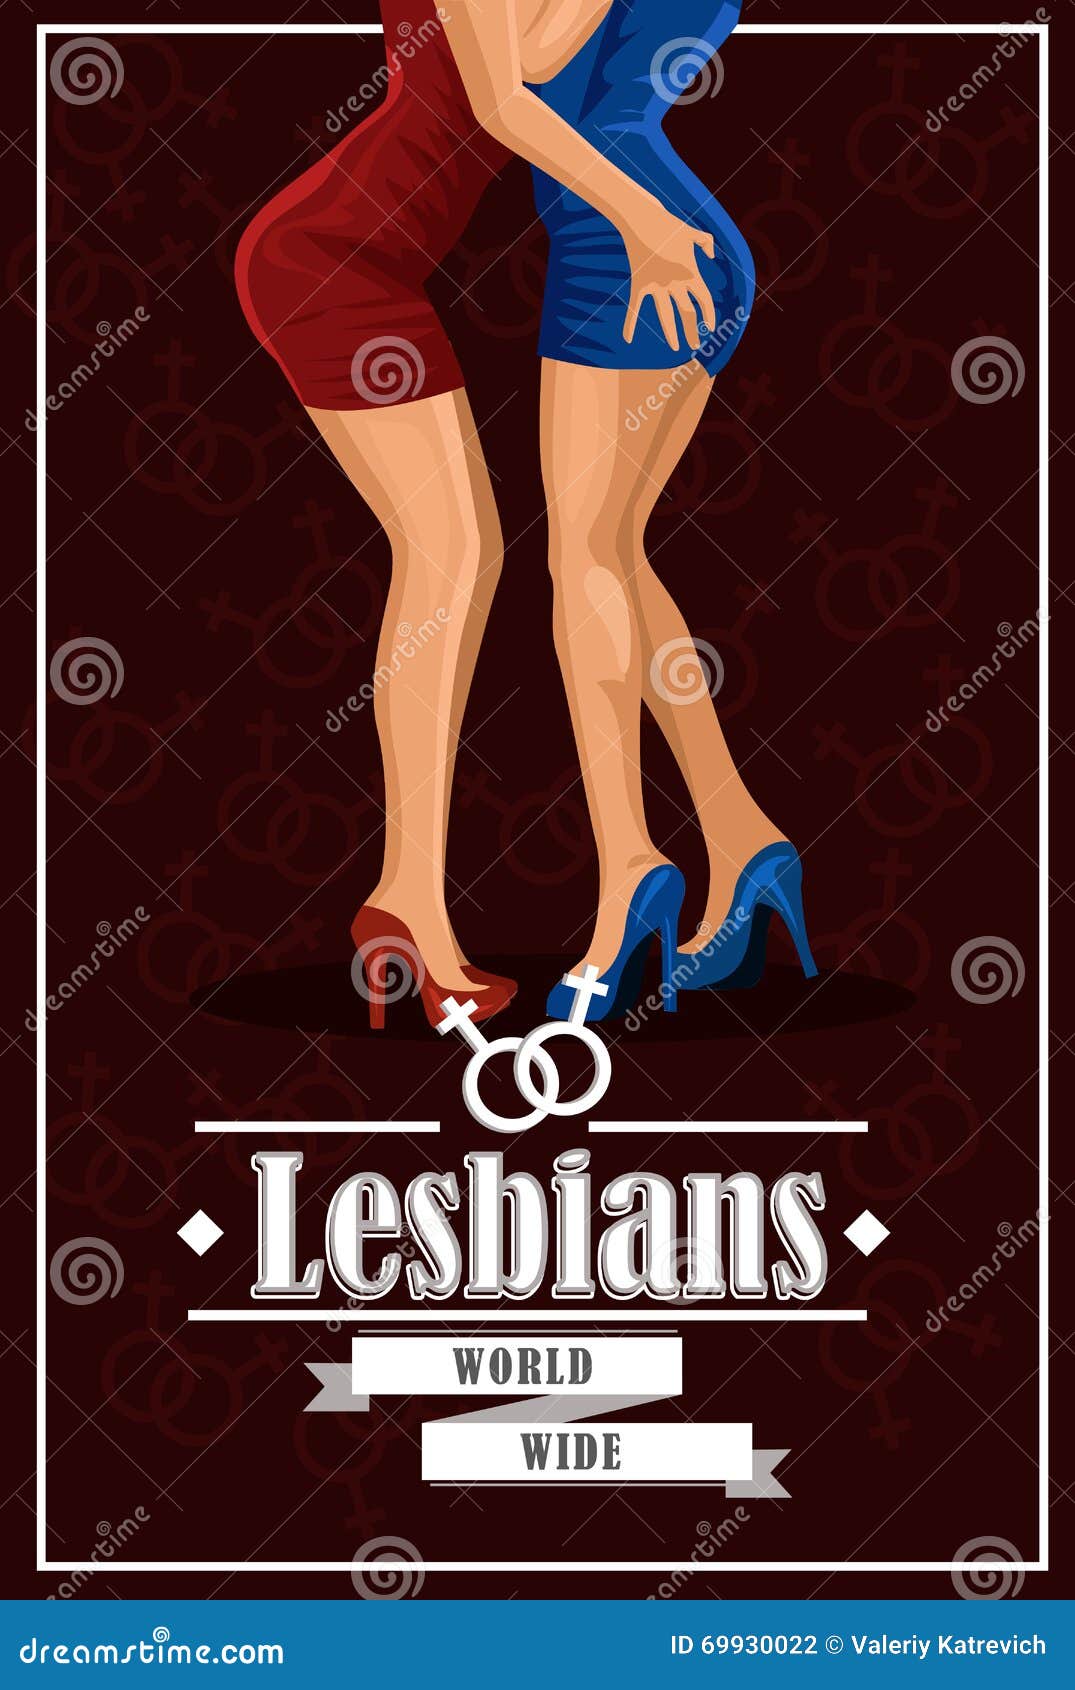 Lesbian Legs